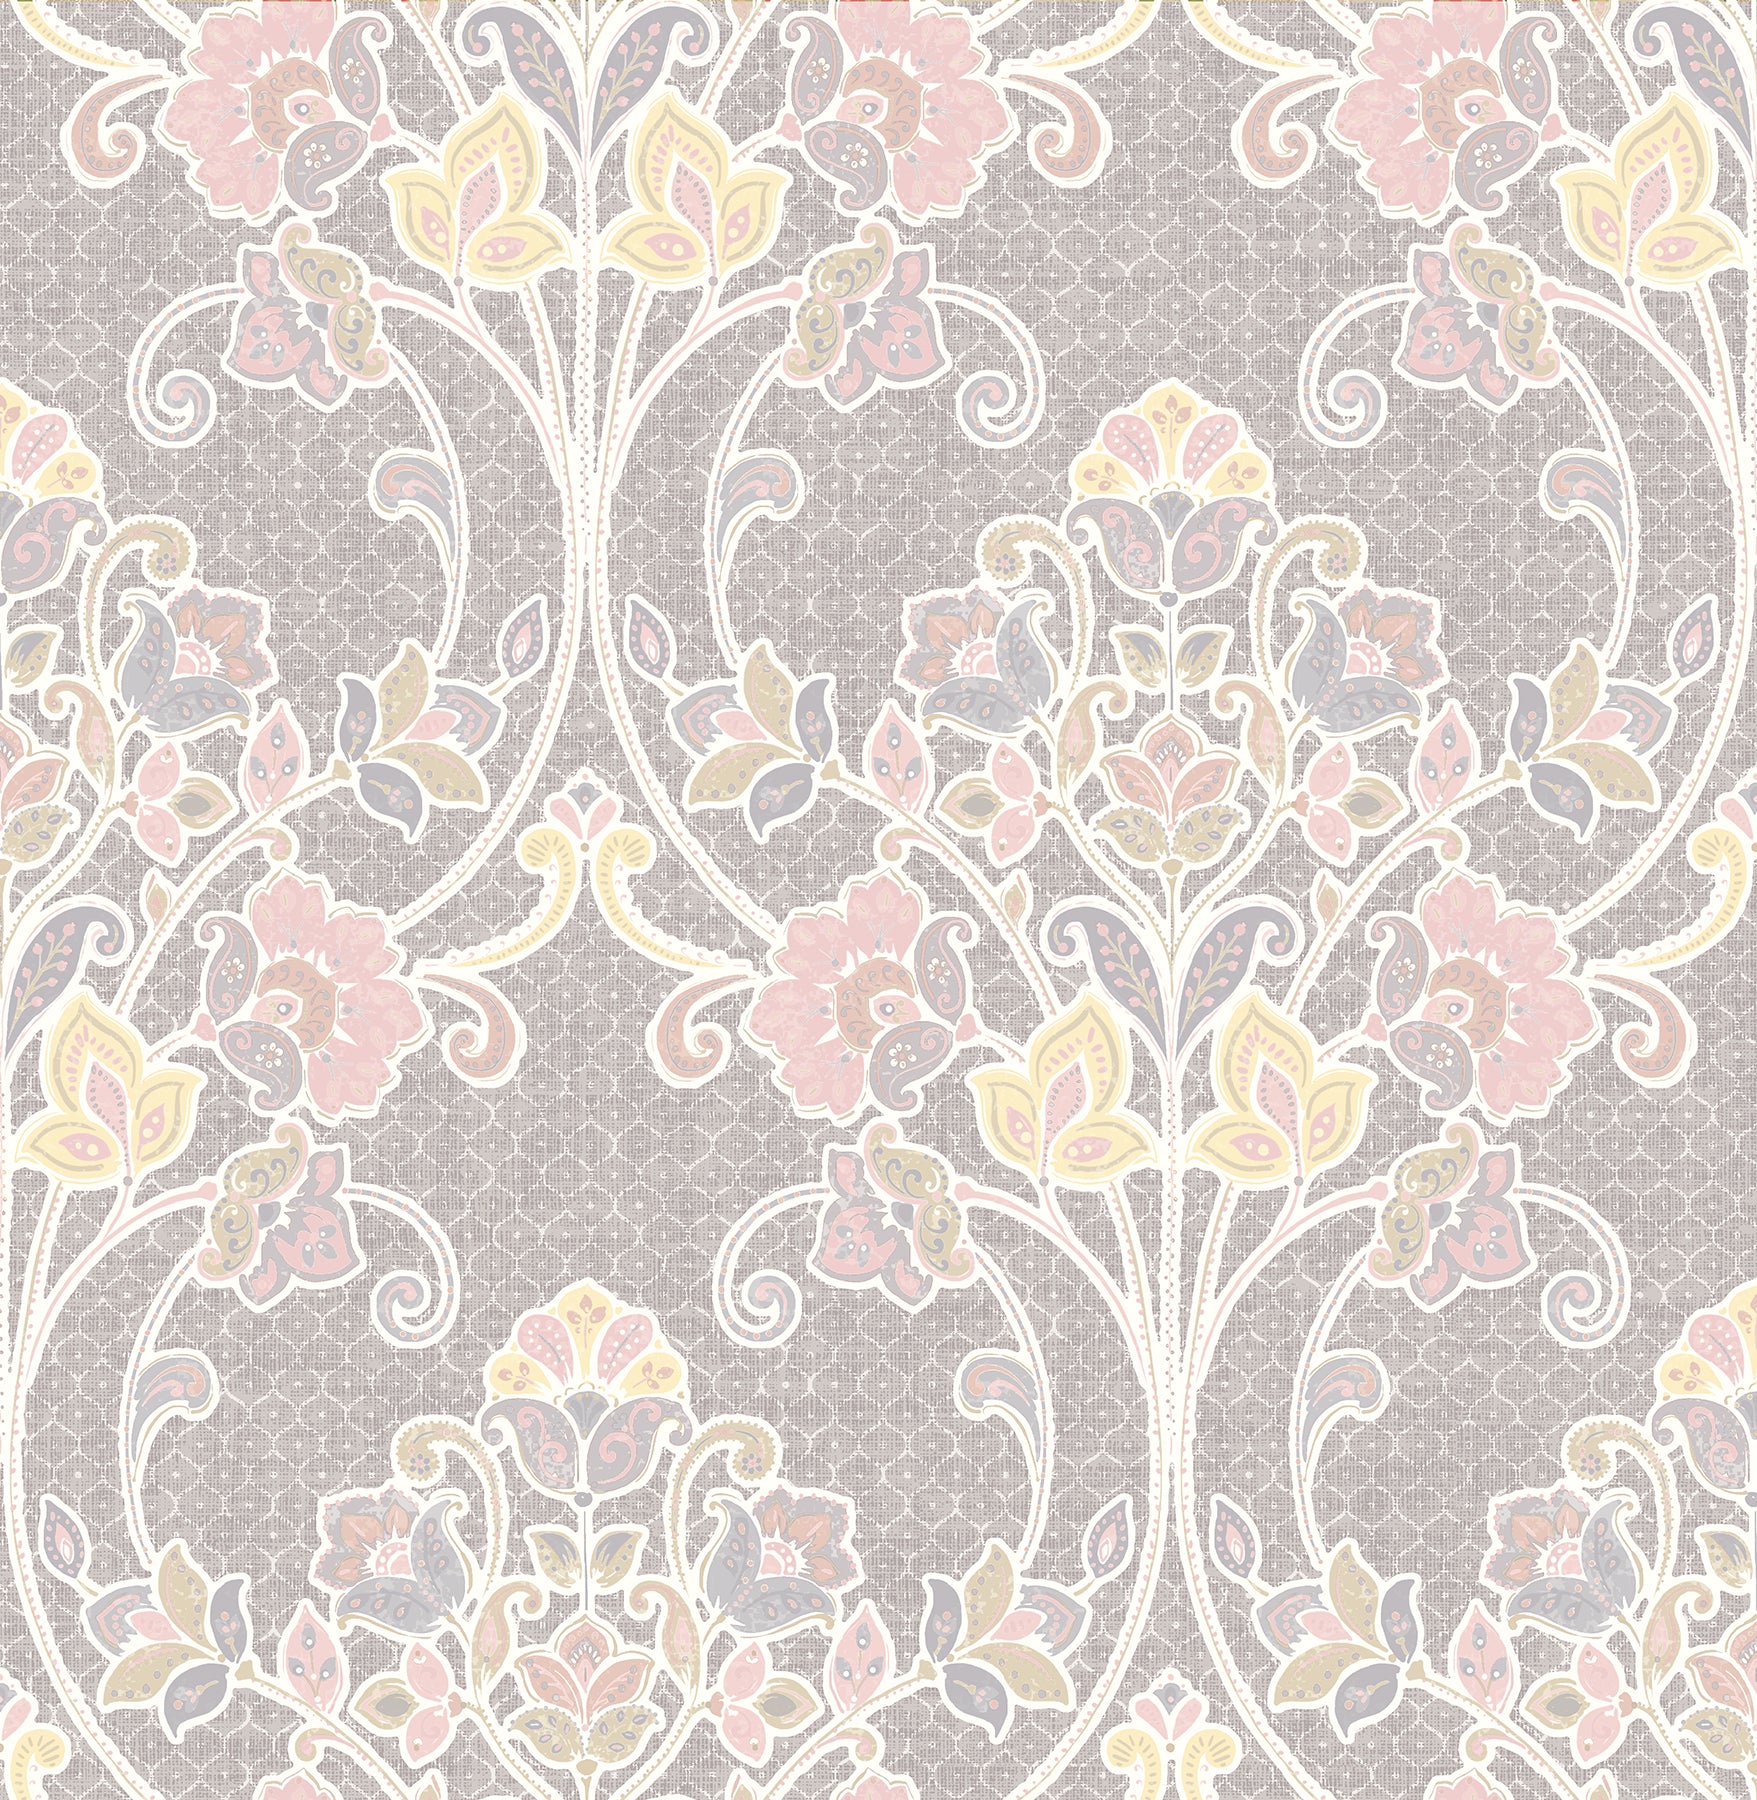 Order 1014-001809 Kismet Pink Willow Pink Nouveau Floral Wallpaper A Street Prints Wallpaper